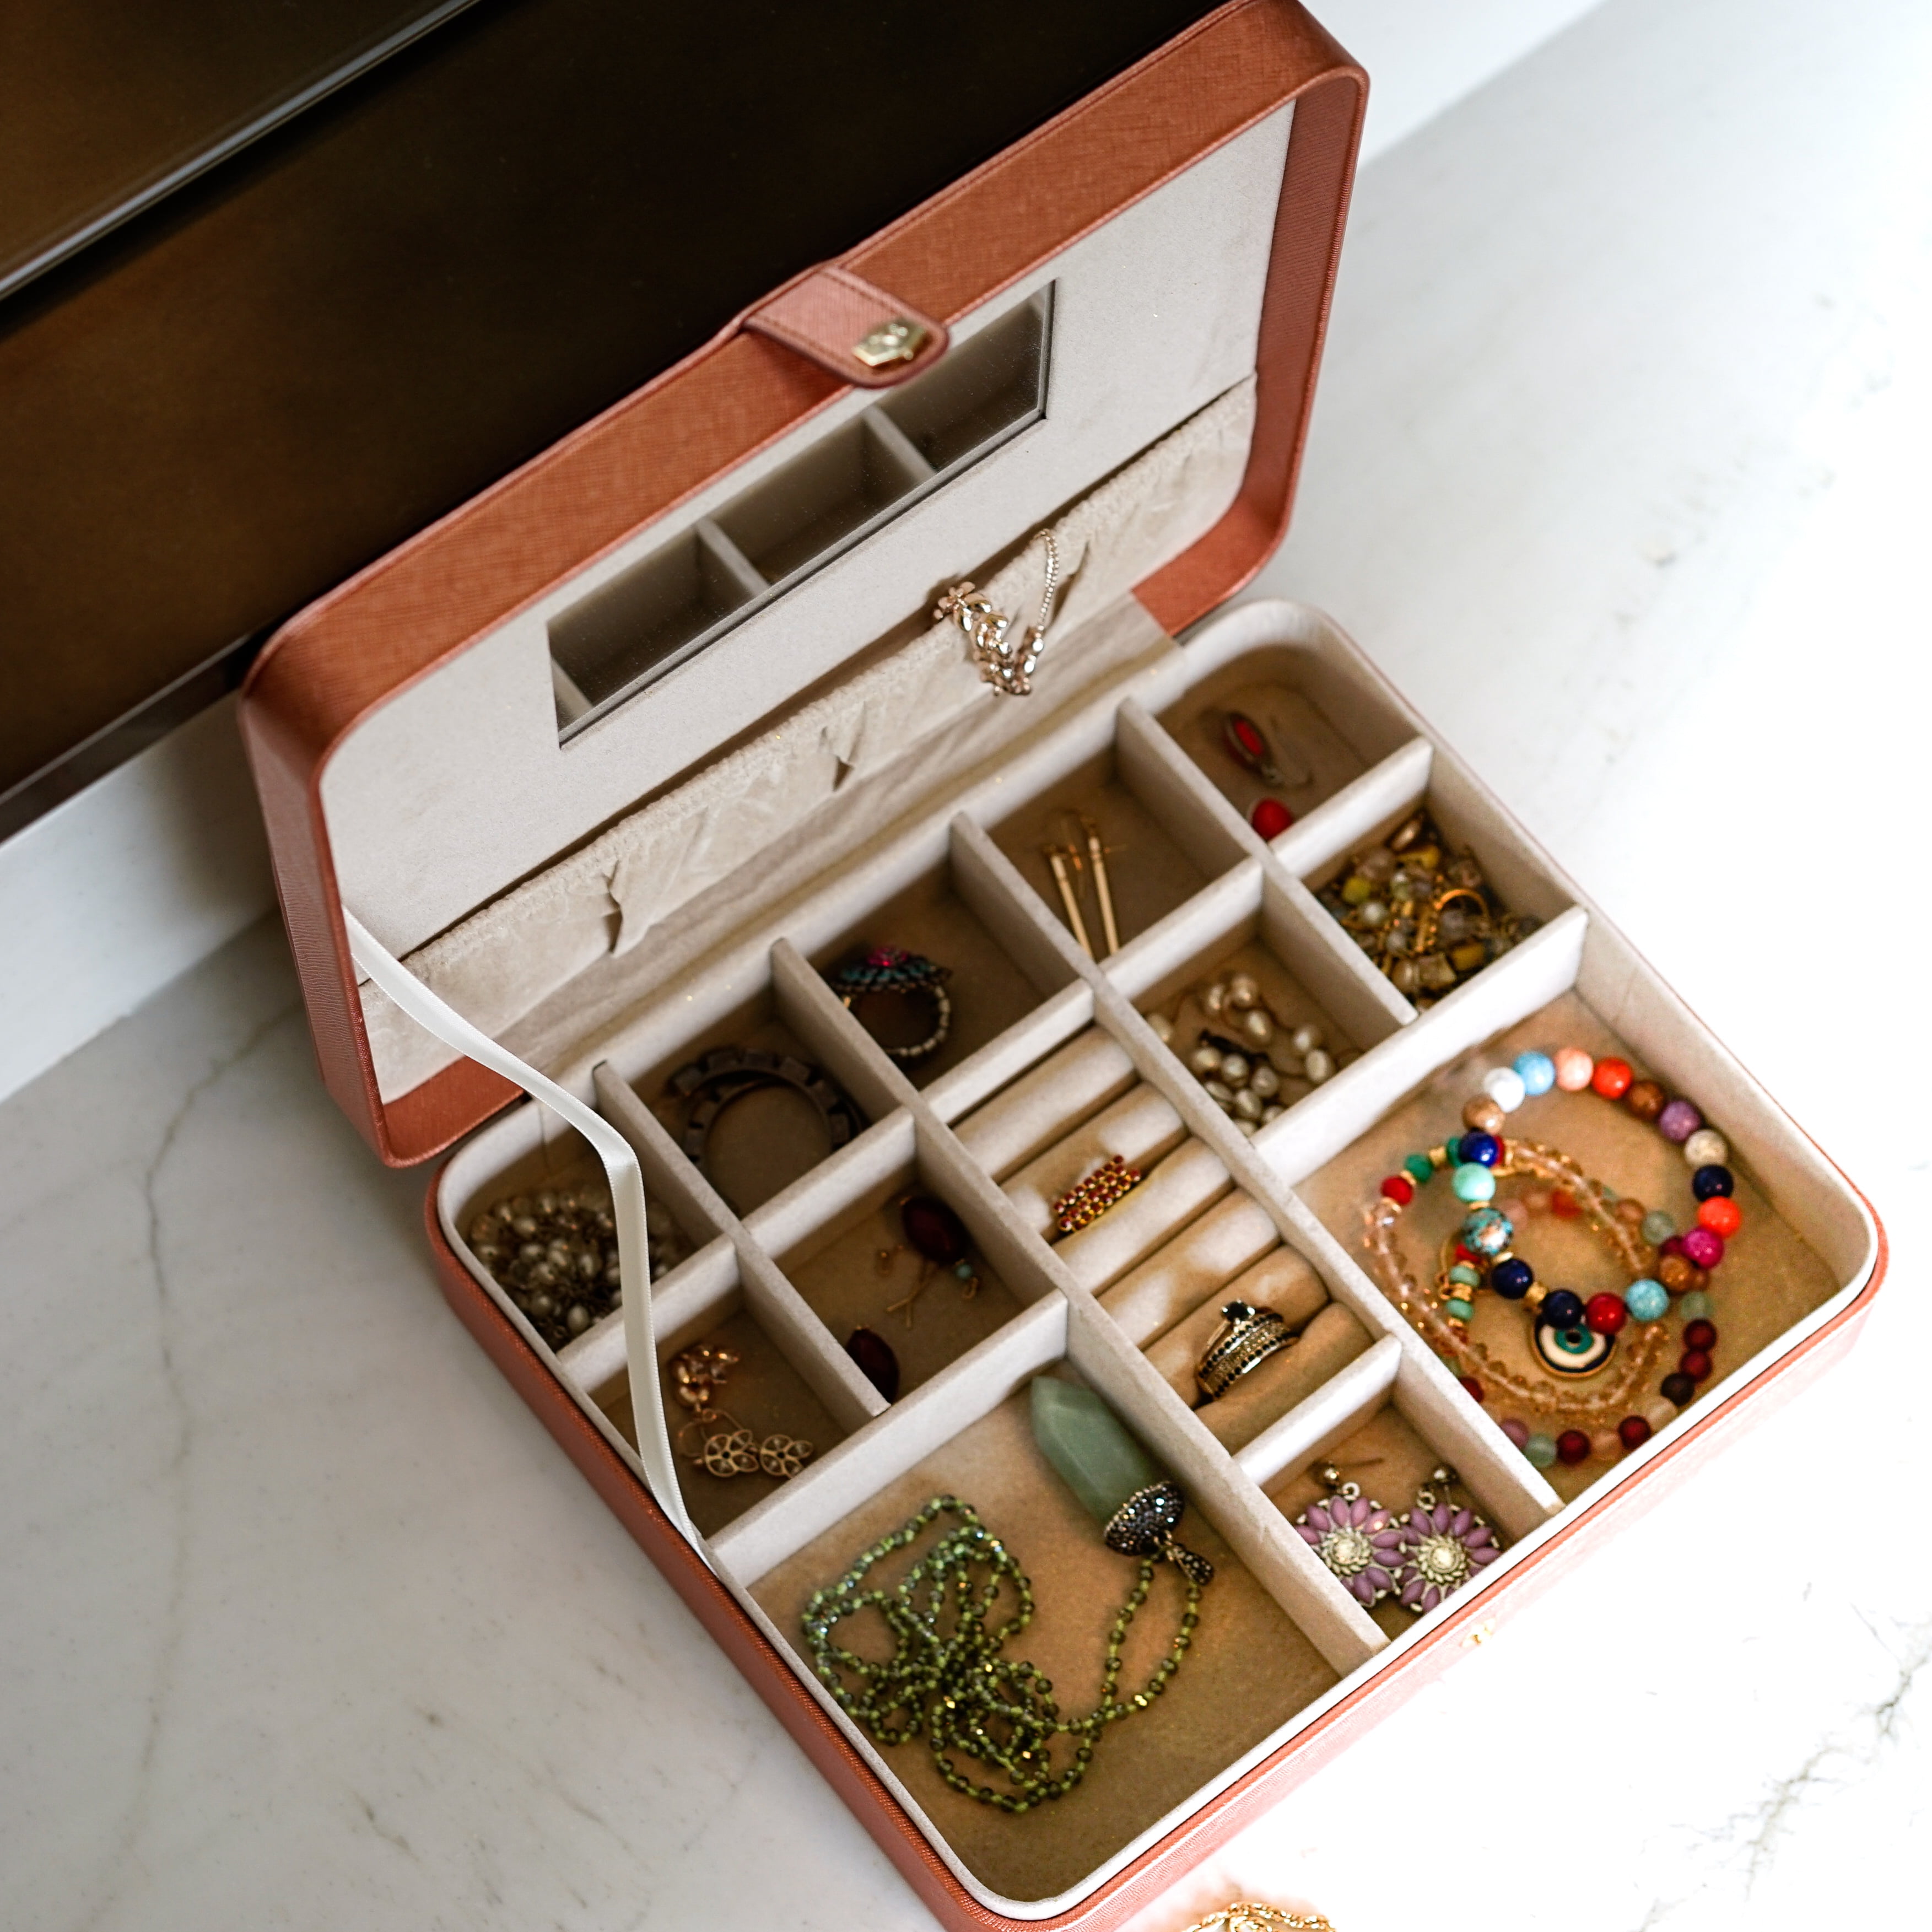 Larlary Travel Jewelry Box,Travel Jewelry Case,Seashell-Shaped Jewelry Box, Jewelry Organizer Box for Women, Jewelry Storage Box for Rings, Earrings